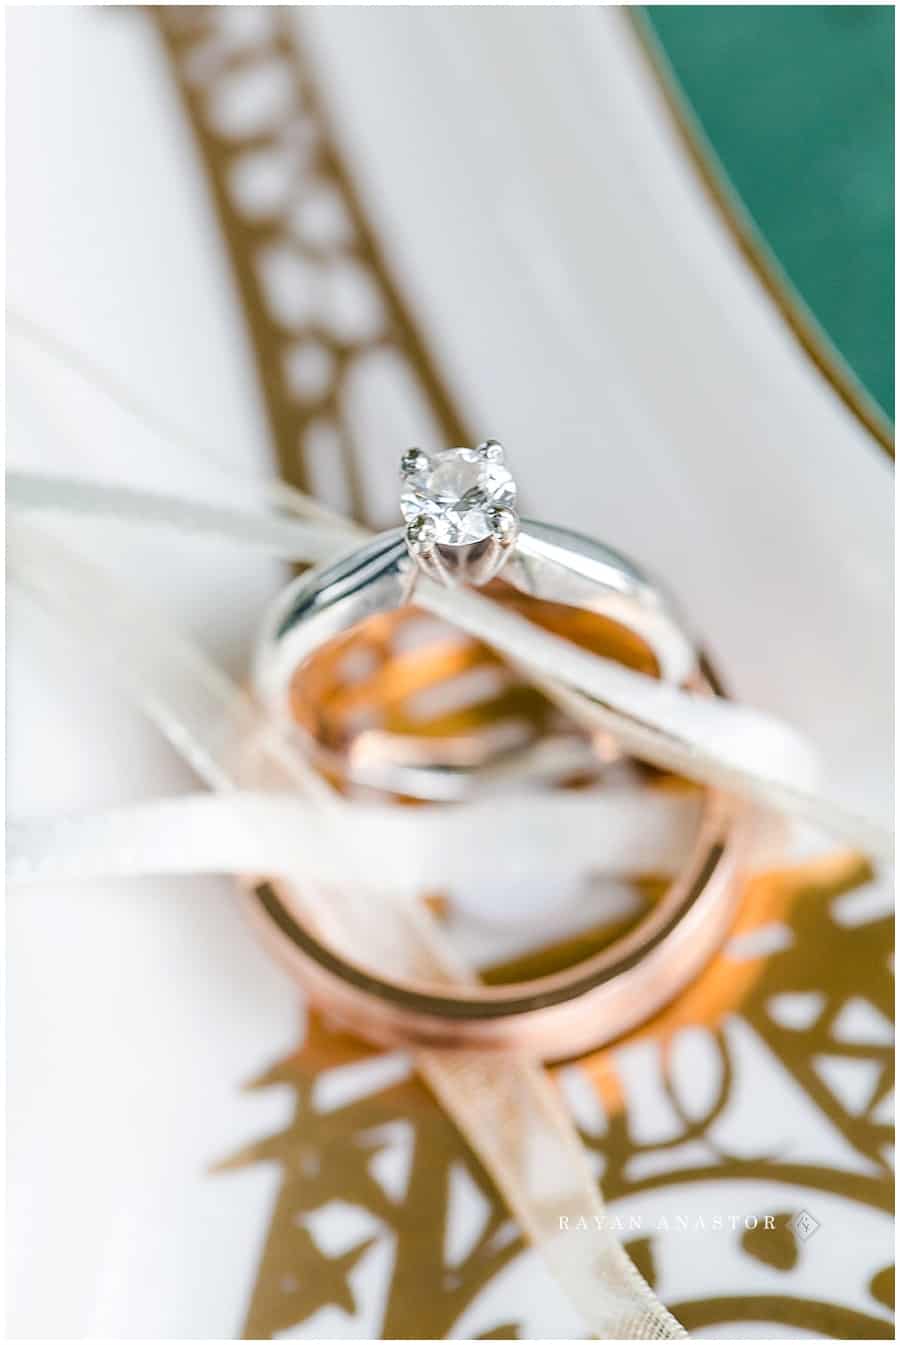 Wedding Rings on a Paris Wedding Dish